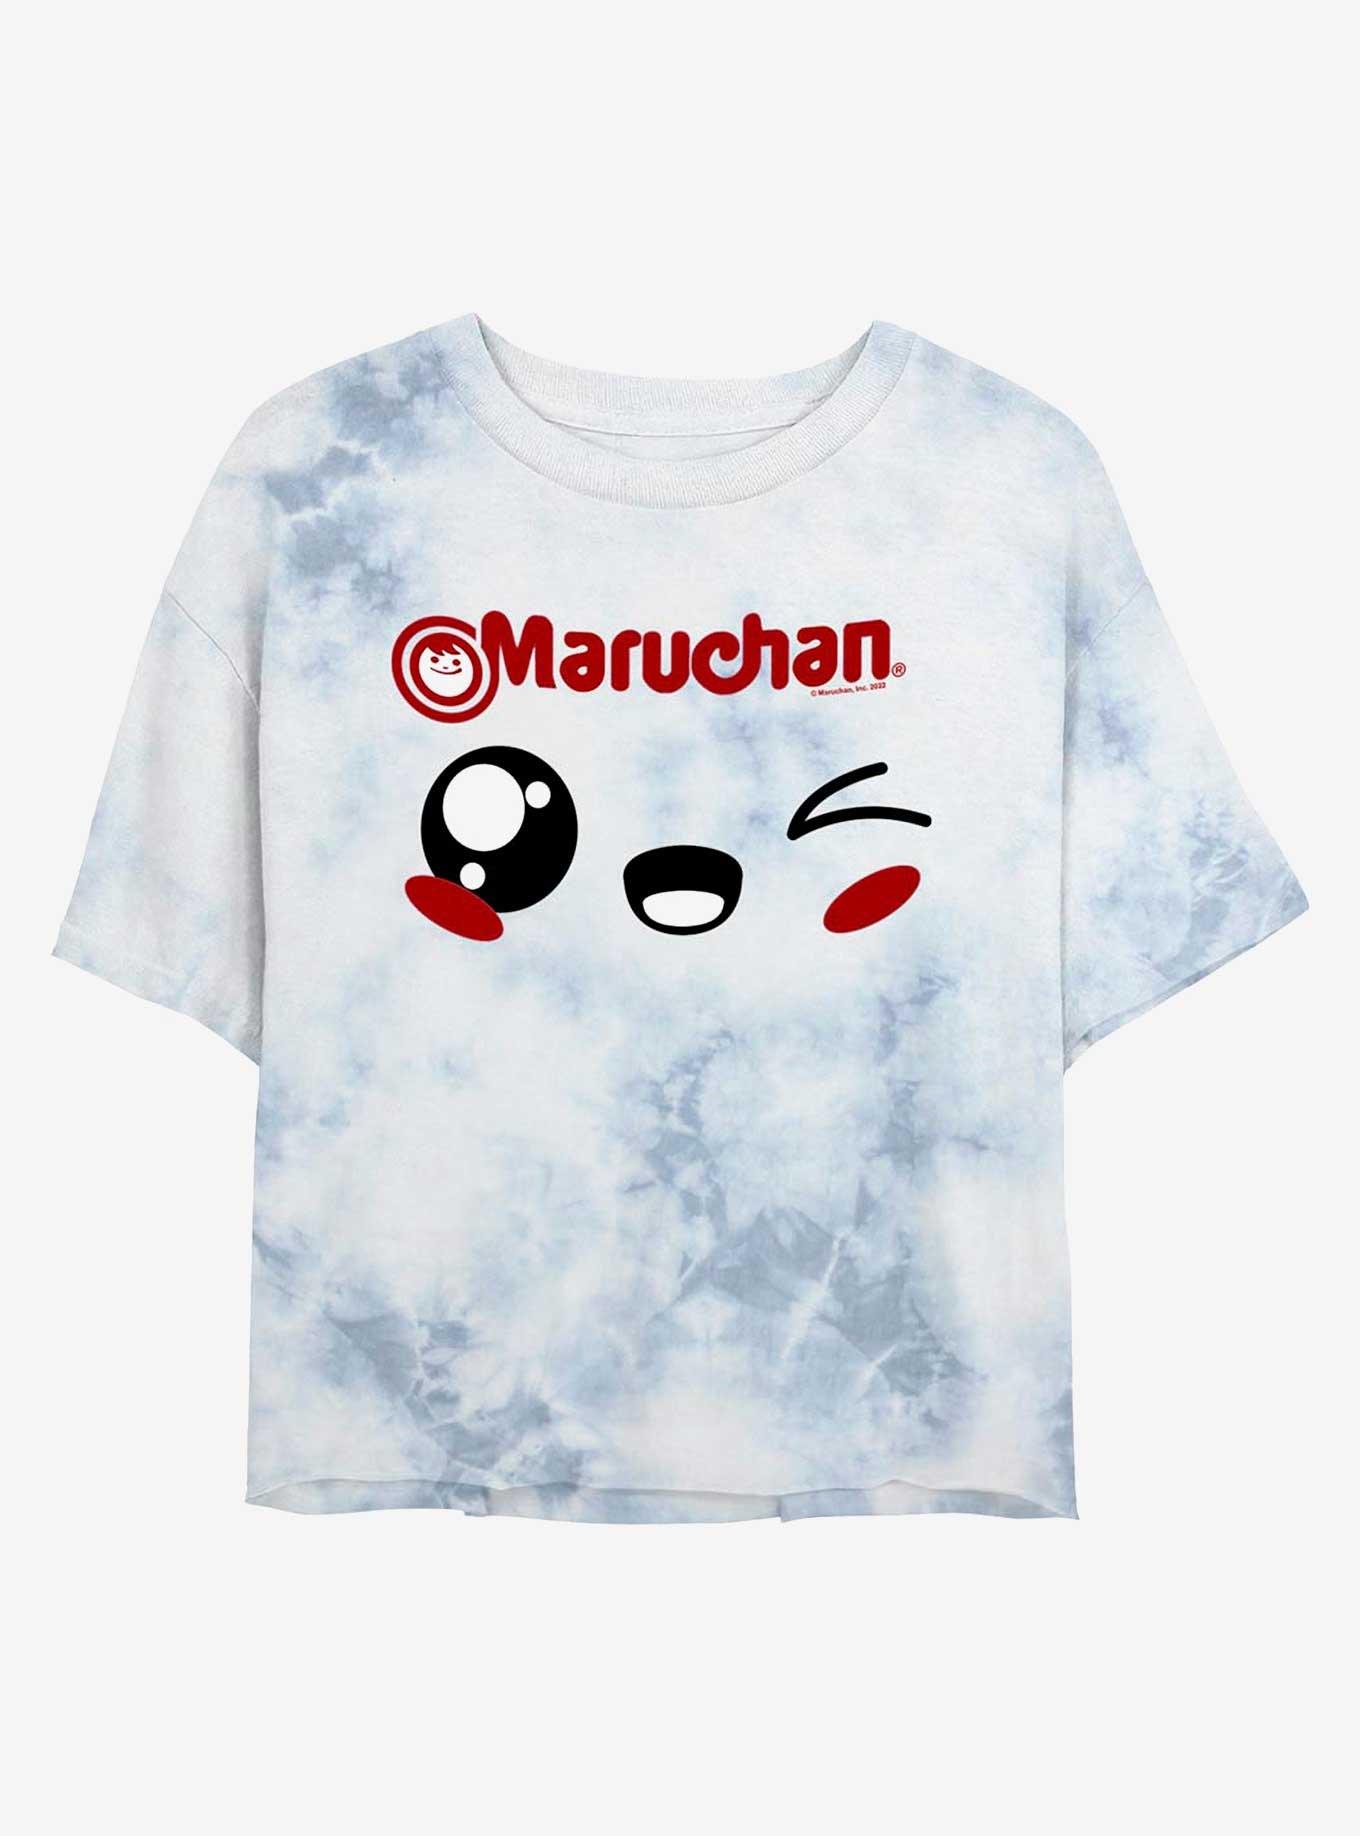 Maruchan Kawaii Wink Face Tie-Dye Girls Crop T-Shirt, WHITEBLUE, hi-res